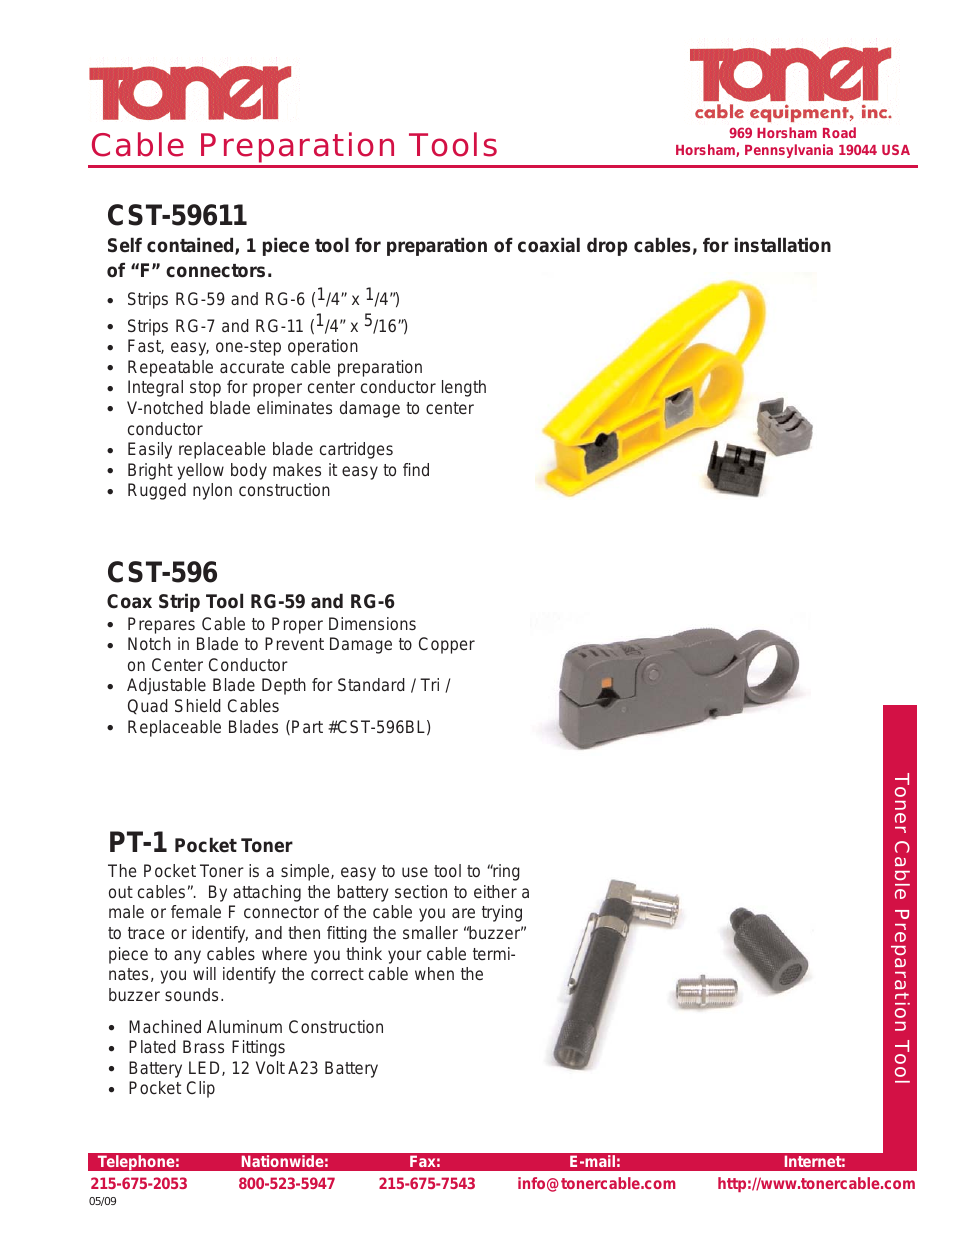 CST-596 Coax Strip Tool RG-59 and RG-6